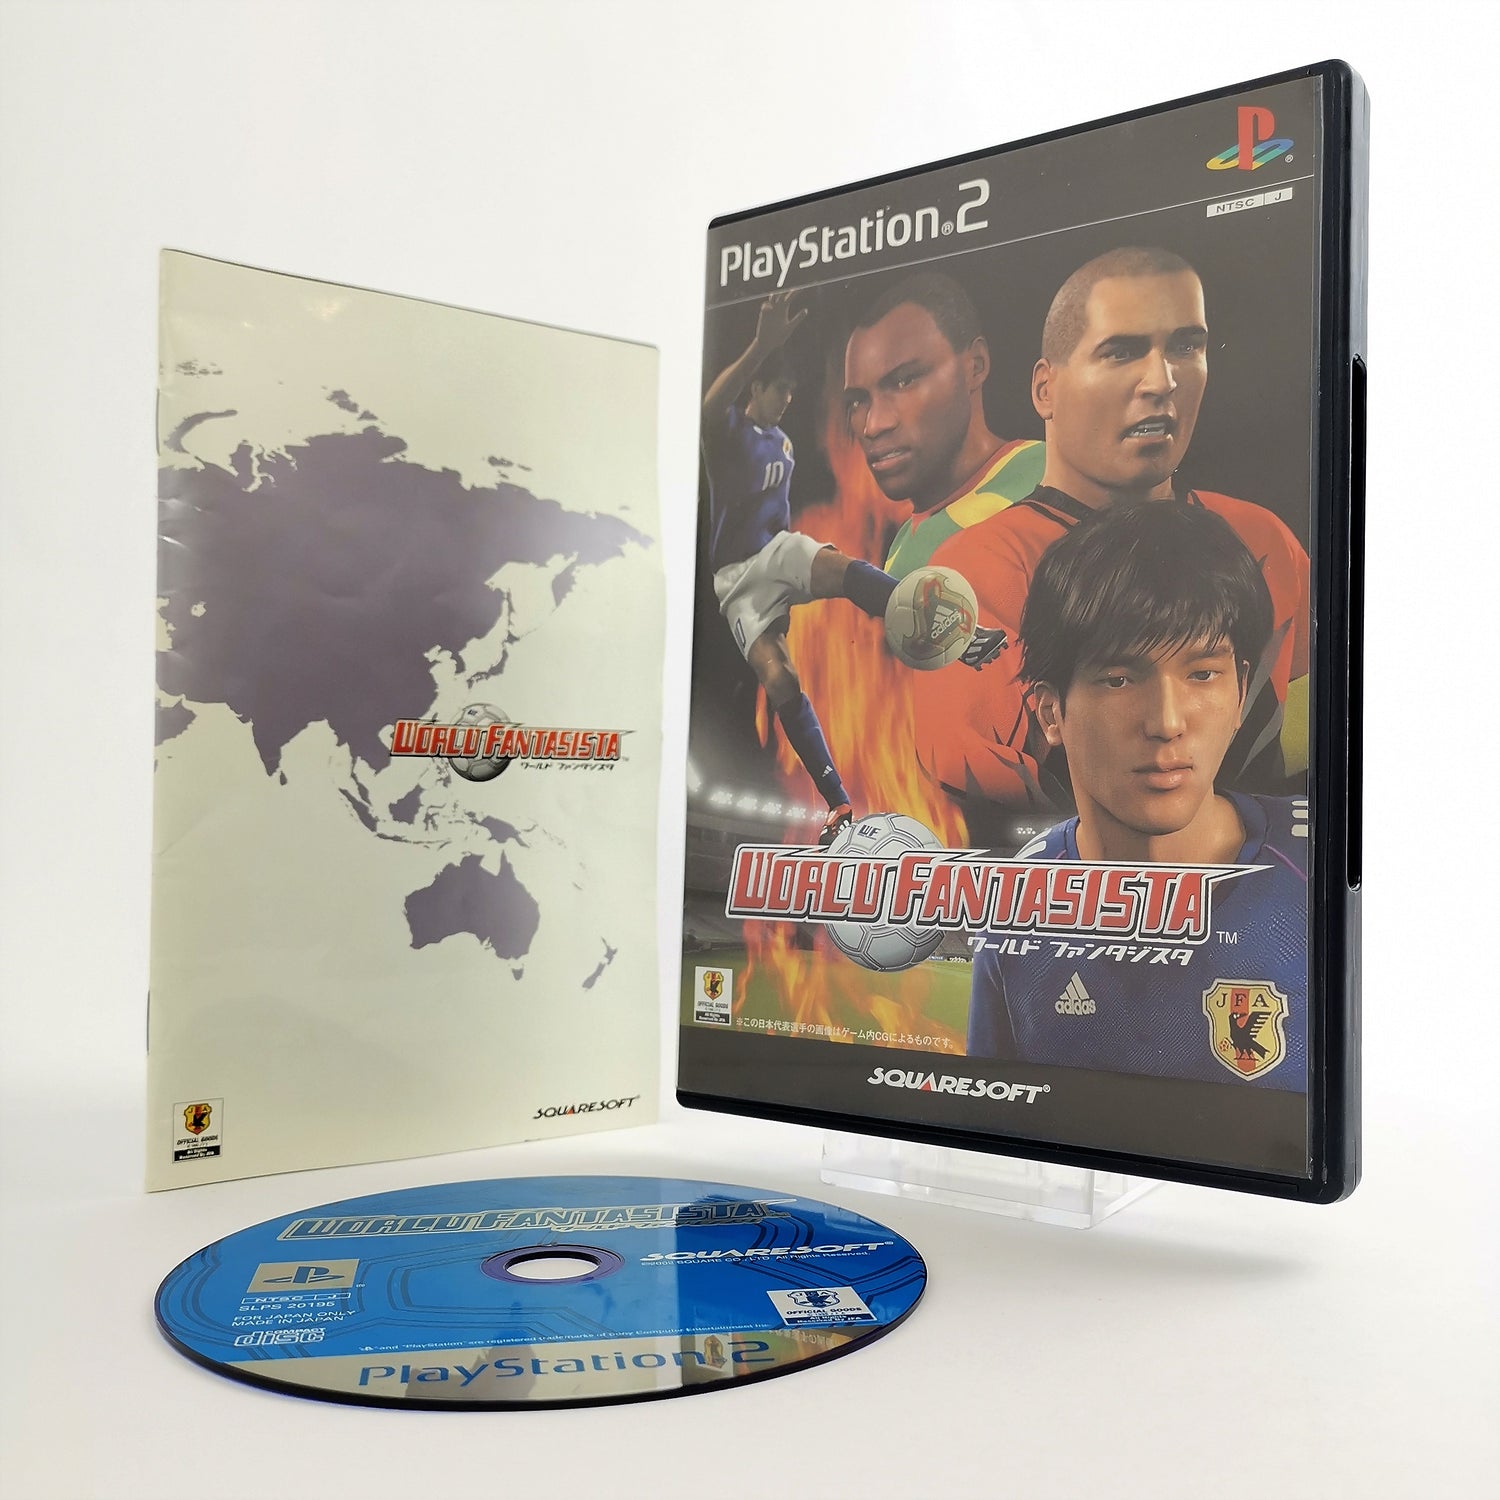 Sony Playstation 2 Game: World Fantasista - Football | Original packaging NTSC-J JAPAN